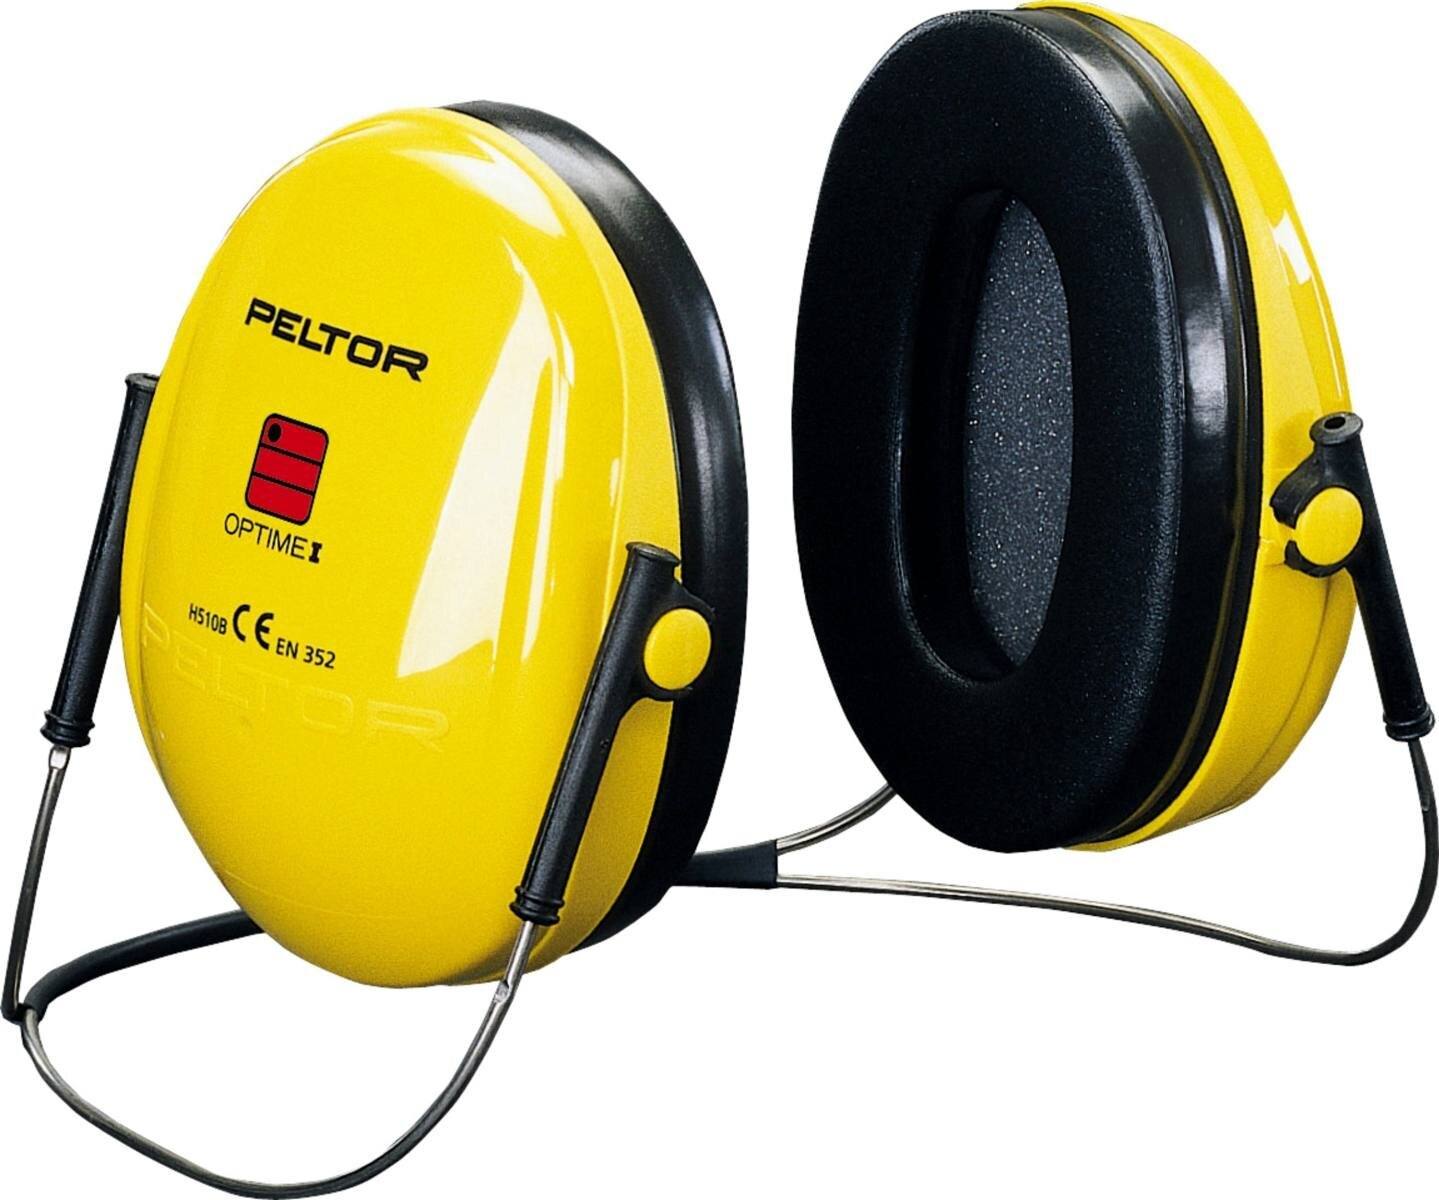 3M Peltor Optime I kuulosuojaimet, kaulapanta, keltainen, SNR = 26 dB, H510B